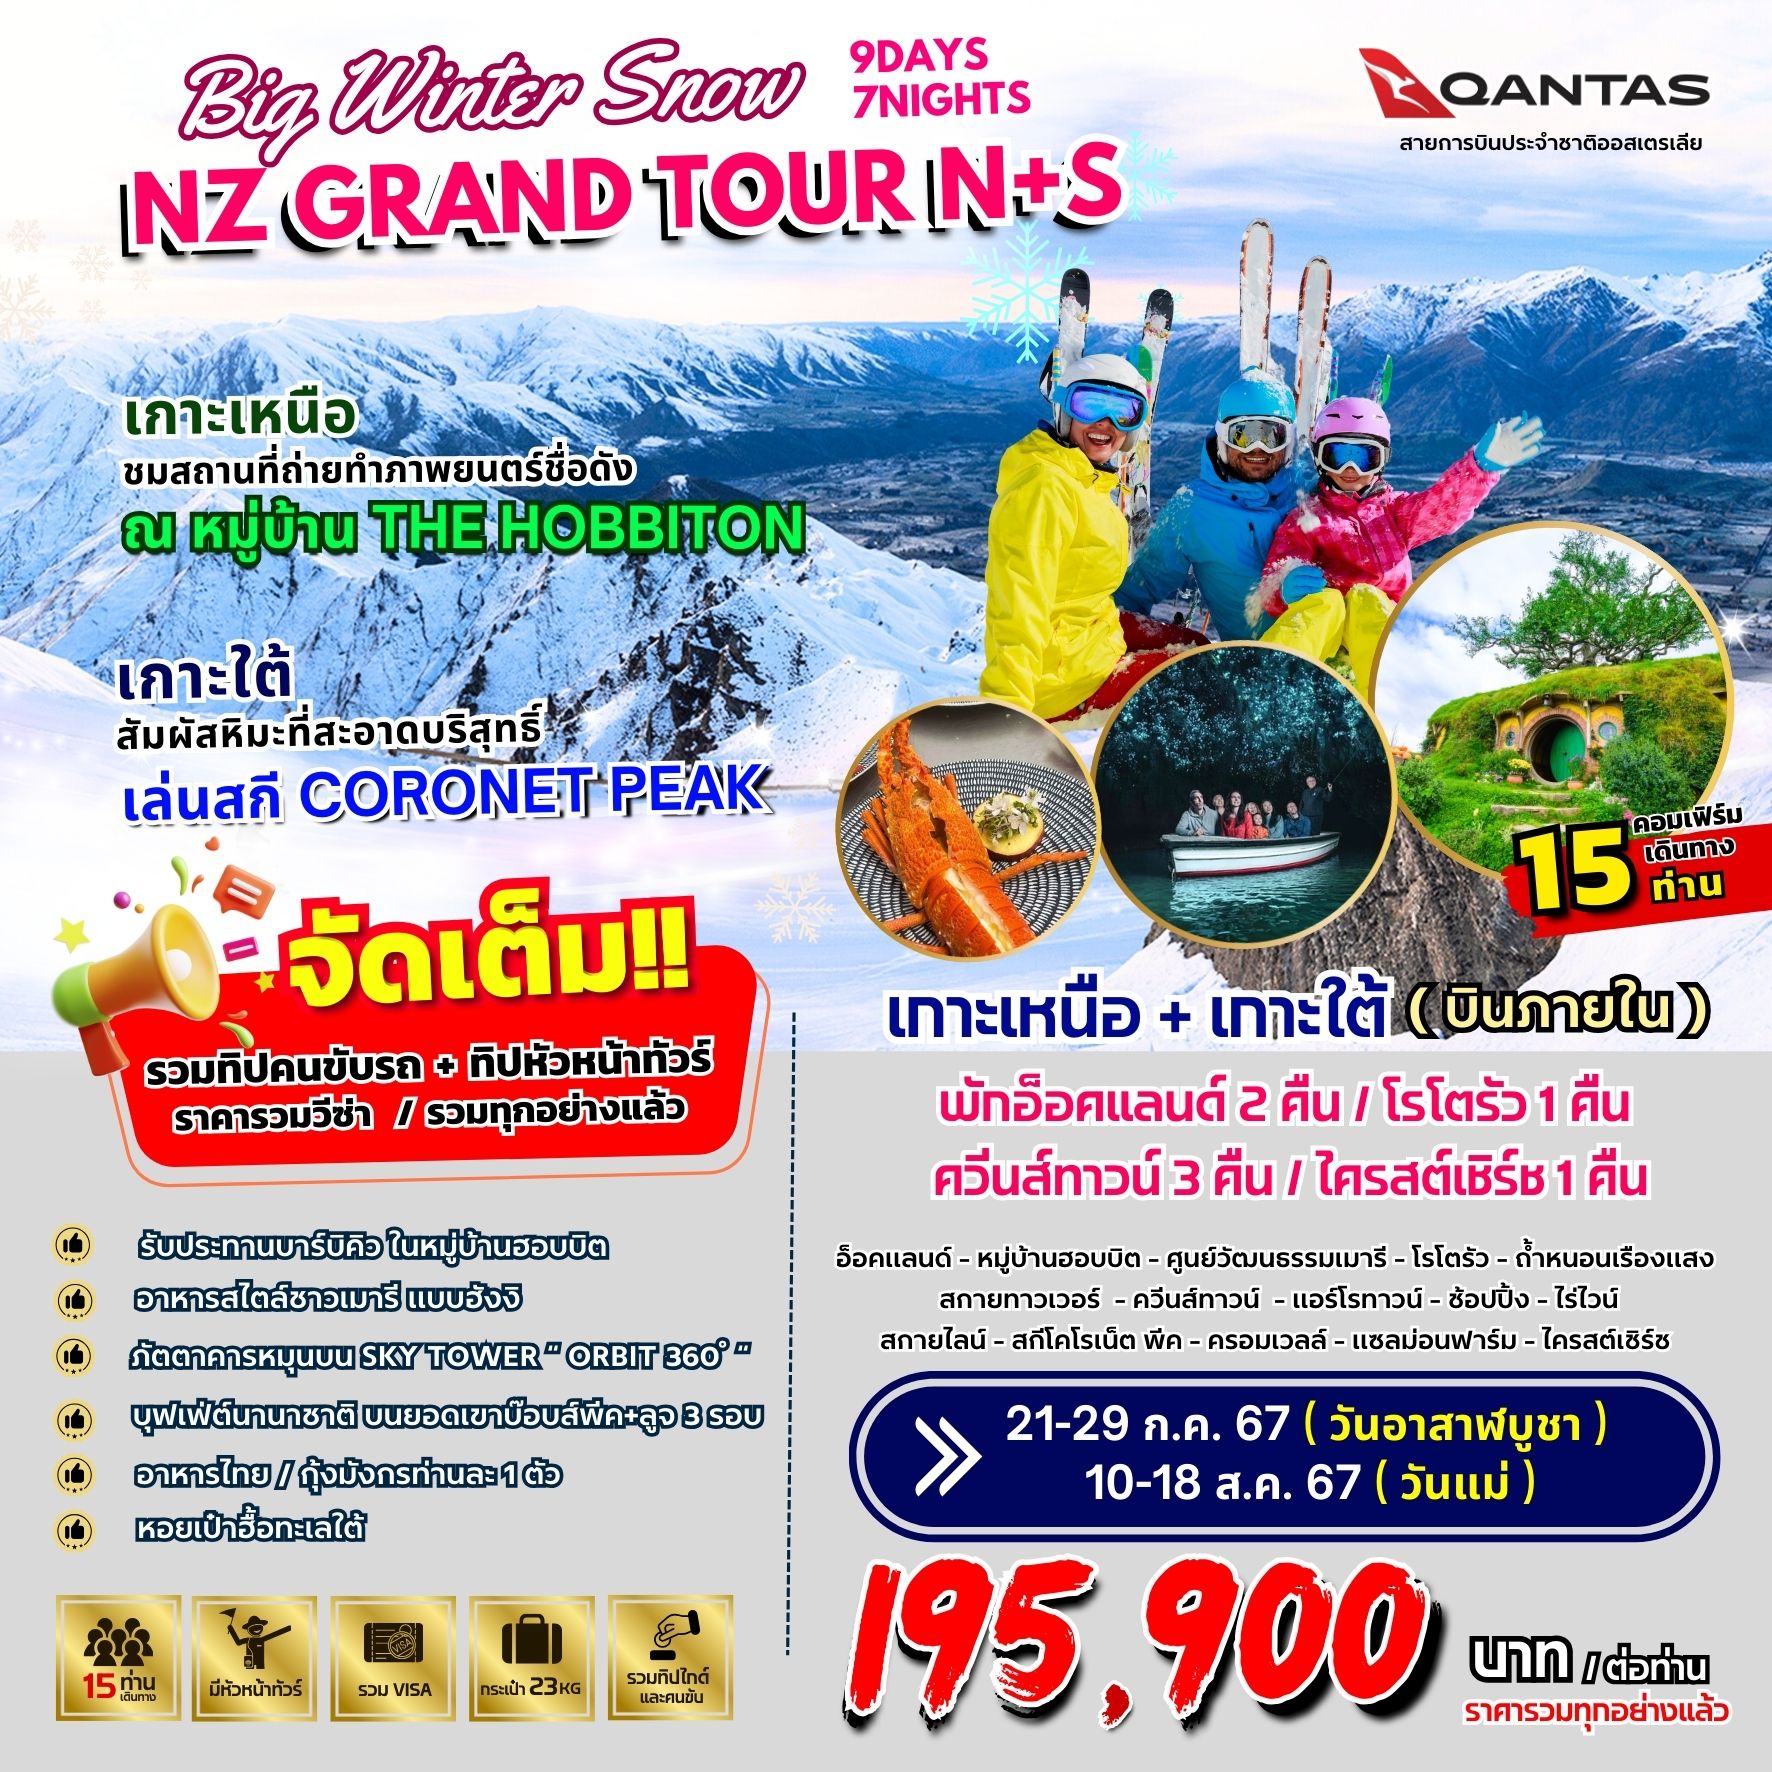 WINTER SNOW NZ GRAND TOUR N+S 9D7N BY QF